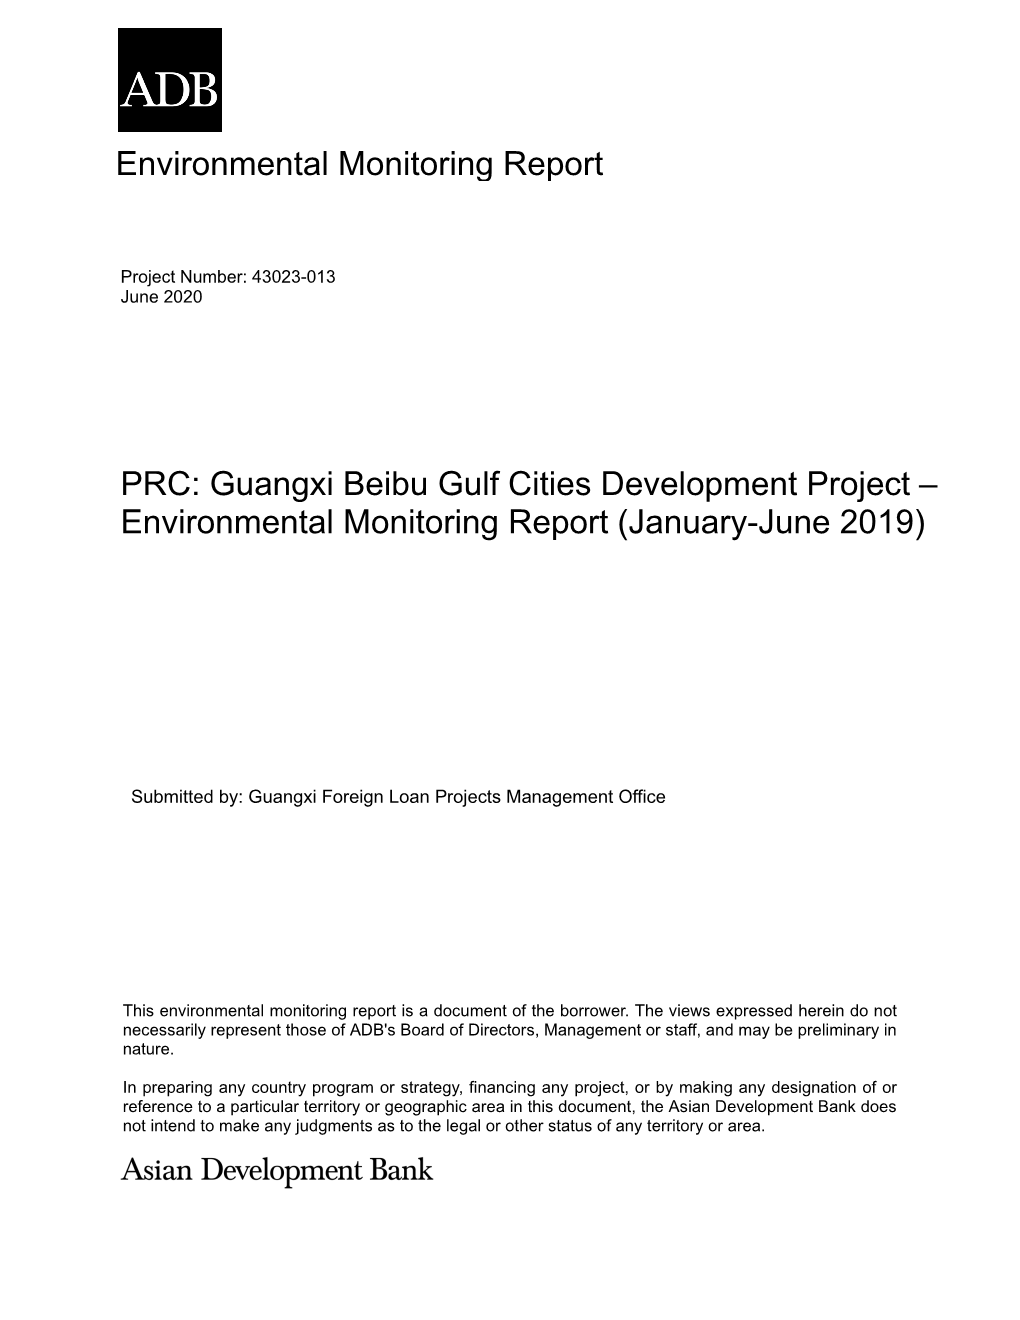 43023-013: Guangxi Beibu Gulf Cities Development Project